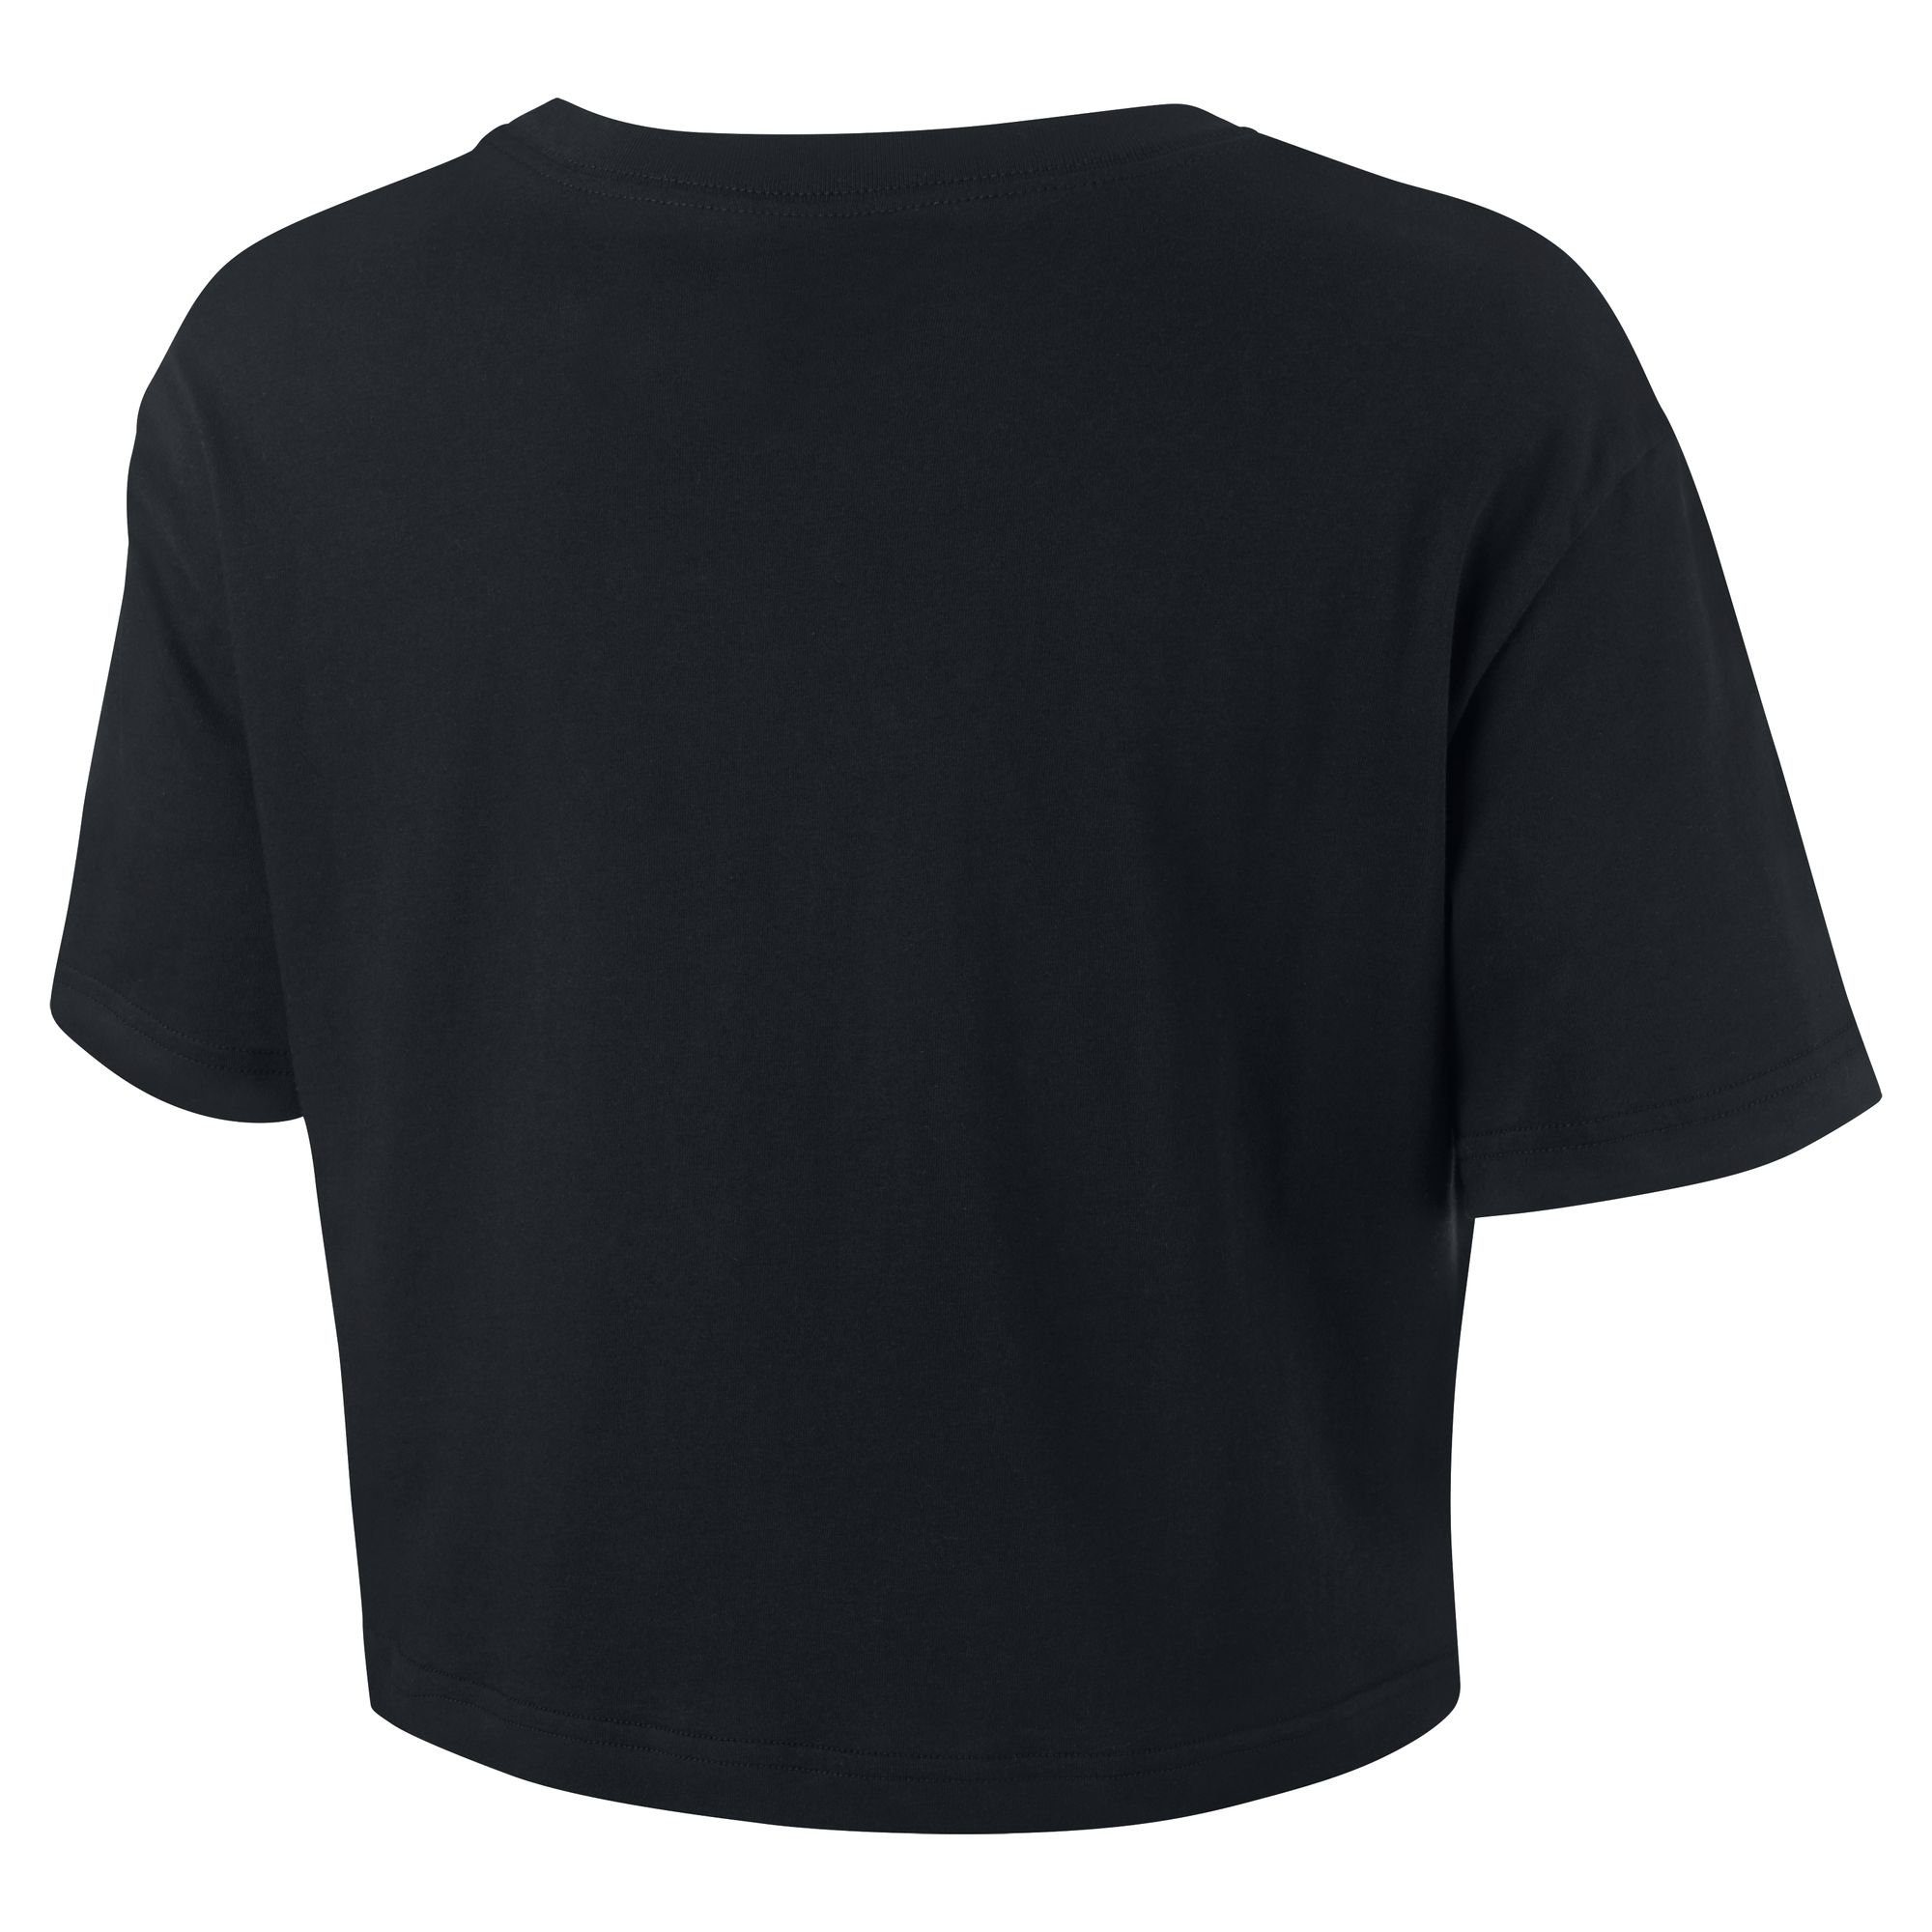 T-SHIRT WOMEN'S schwarzweiss Nike ESSENTIAL T-Shirt LOGO Sportswear CROPPED